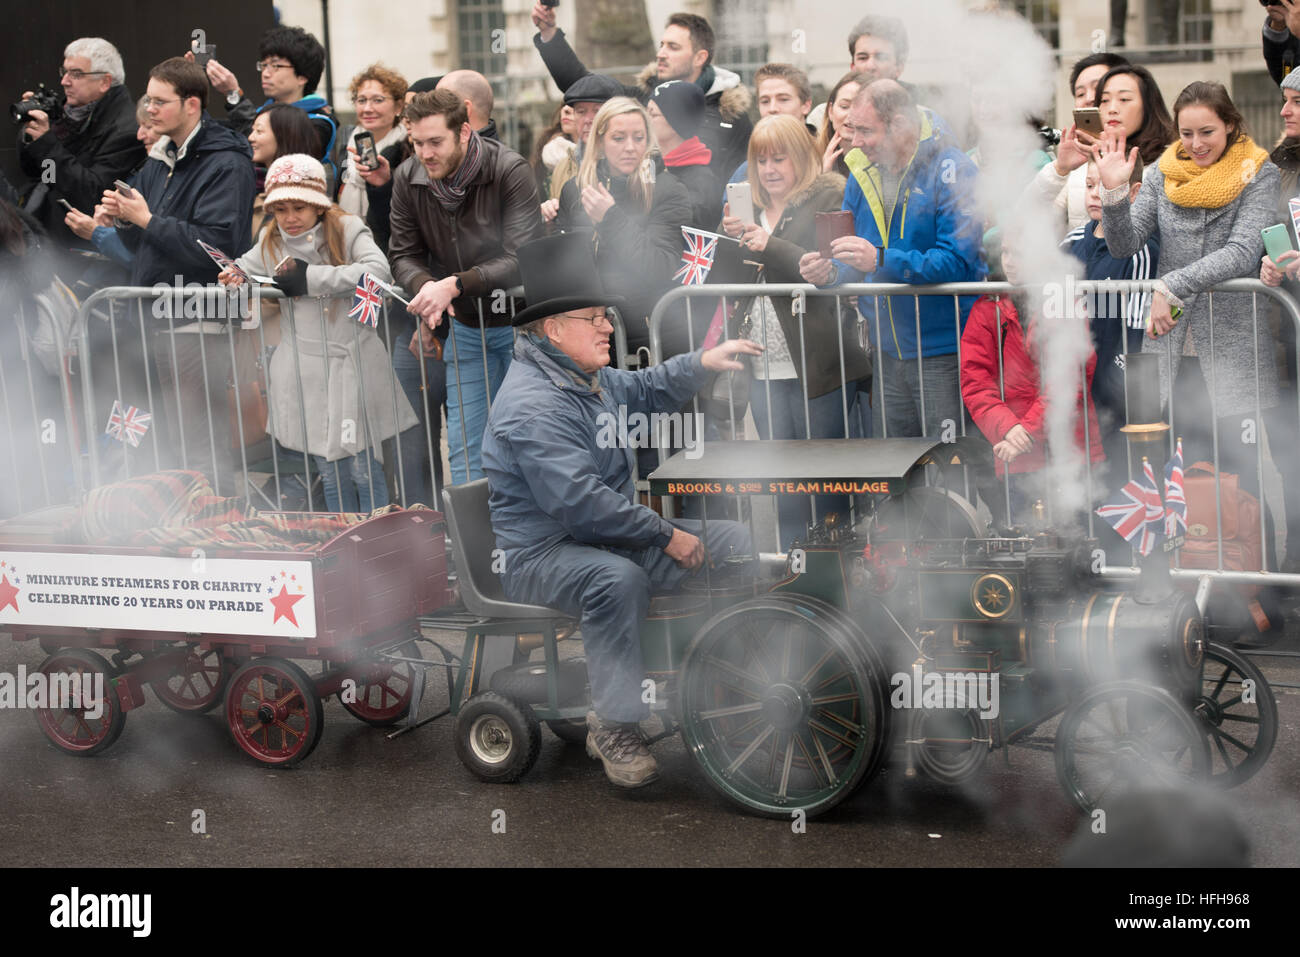 London, UK. 1st January 2017. Miniature steam engines at the London New Year Parade © Ian Davidson/Alamy Live News Stock Photo